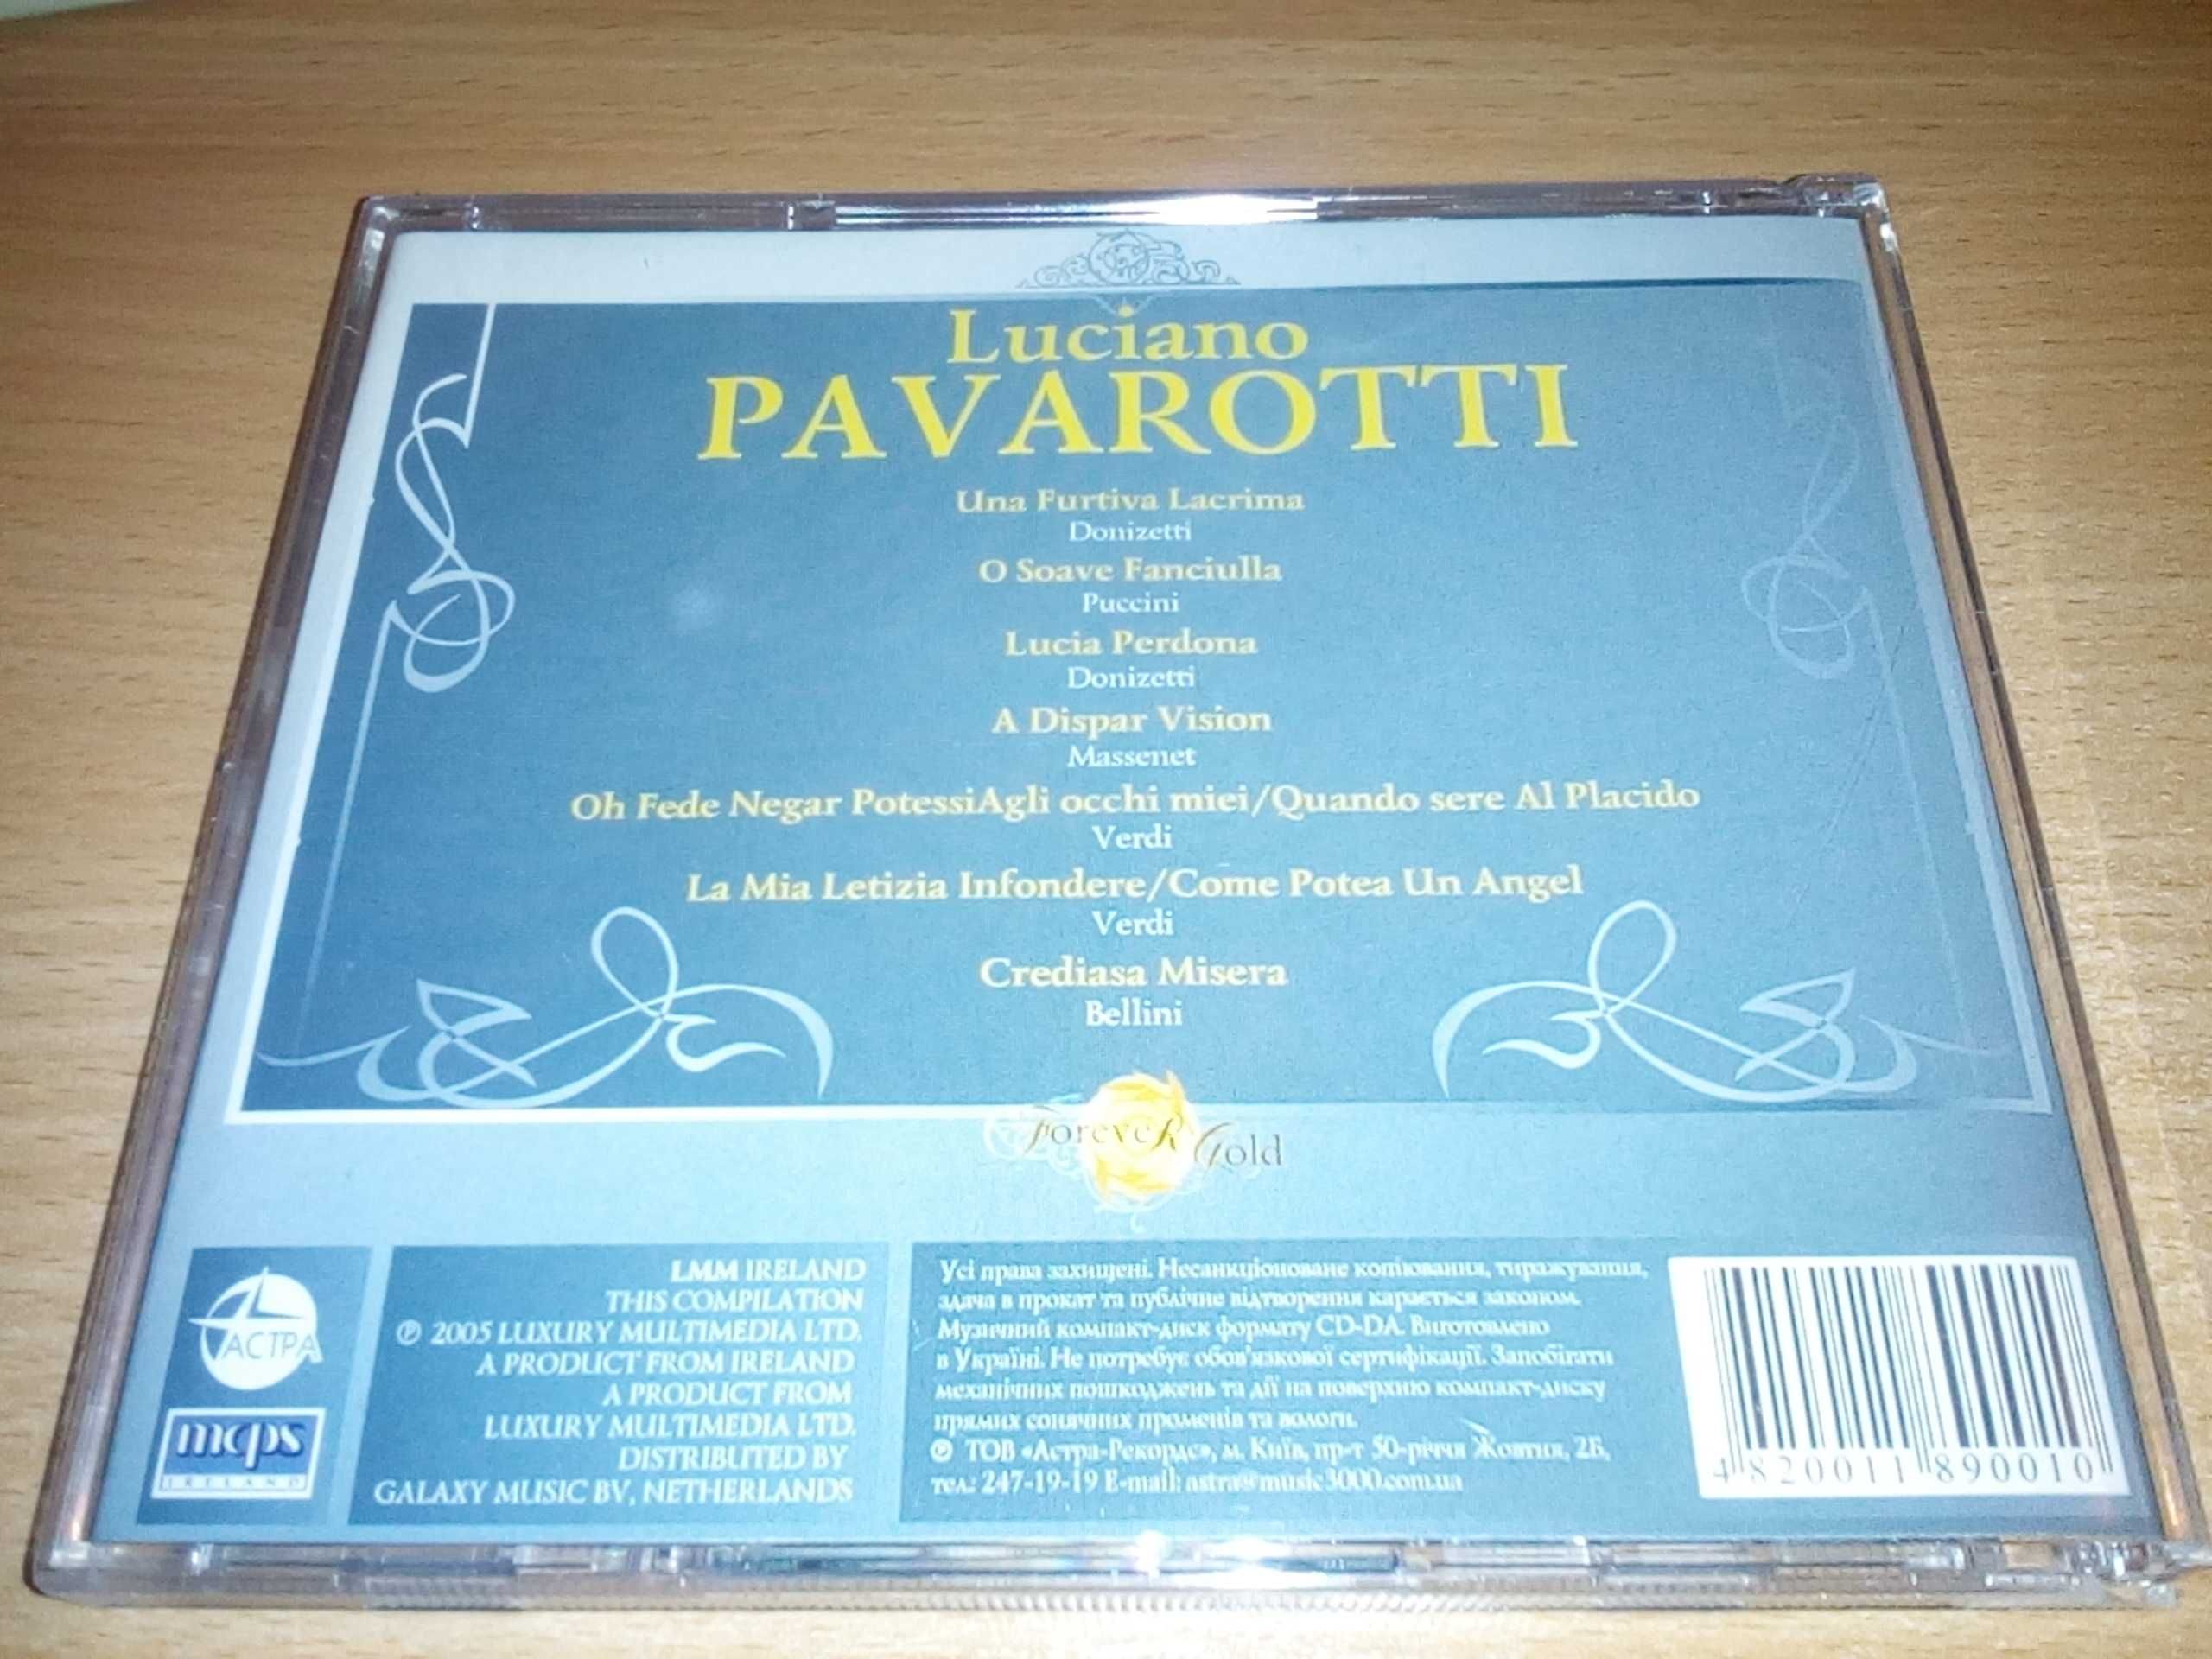 Luciano Pavarotti - The golden voice